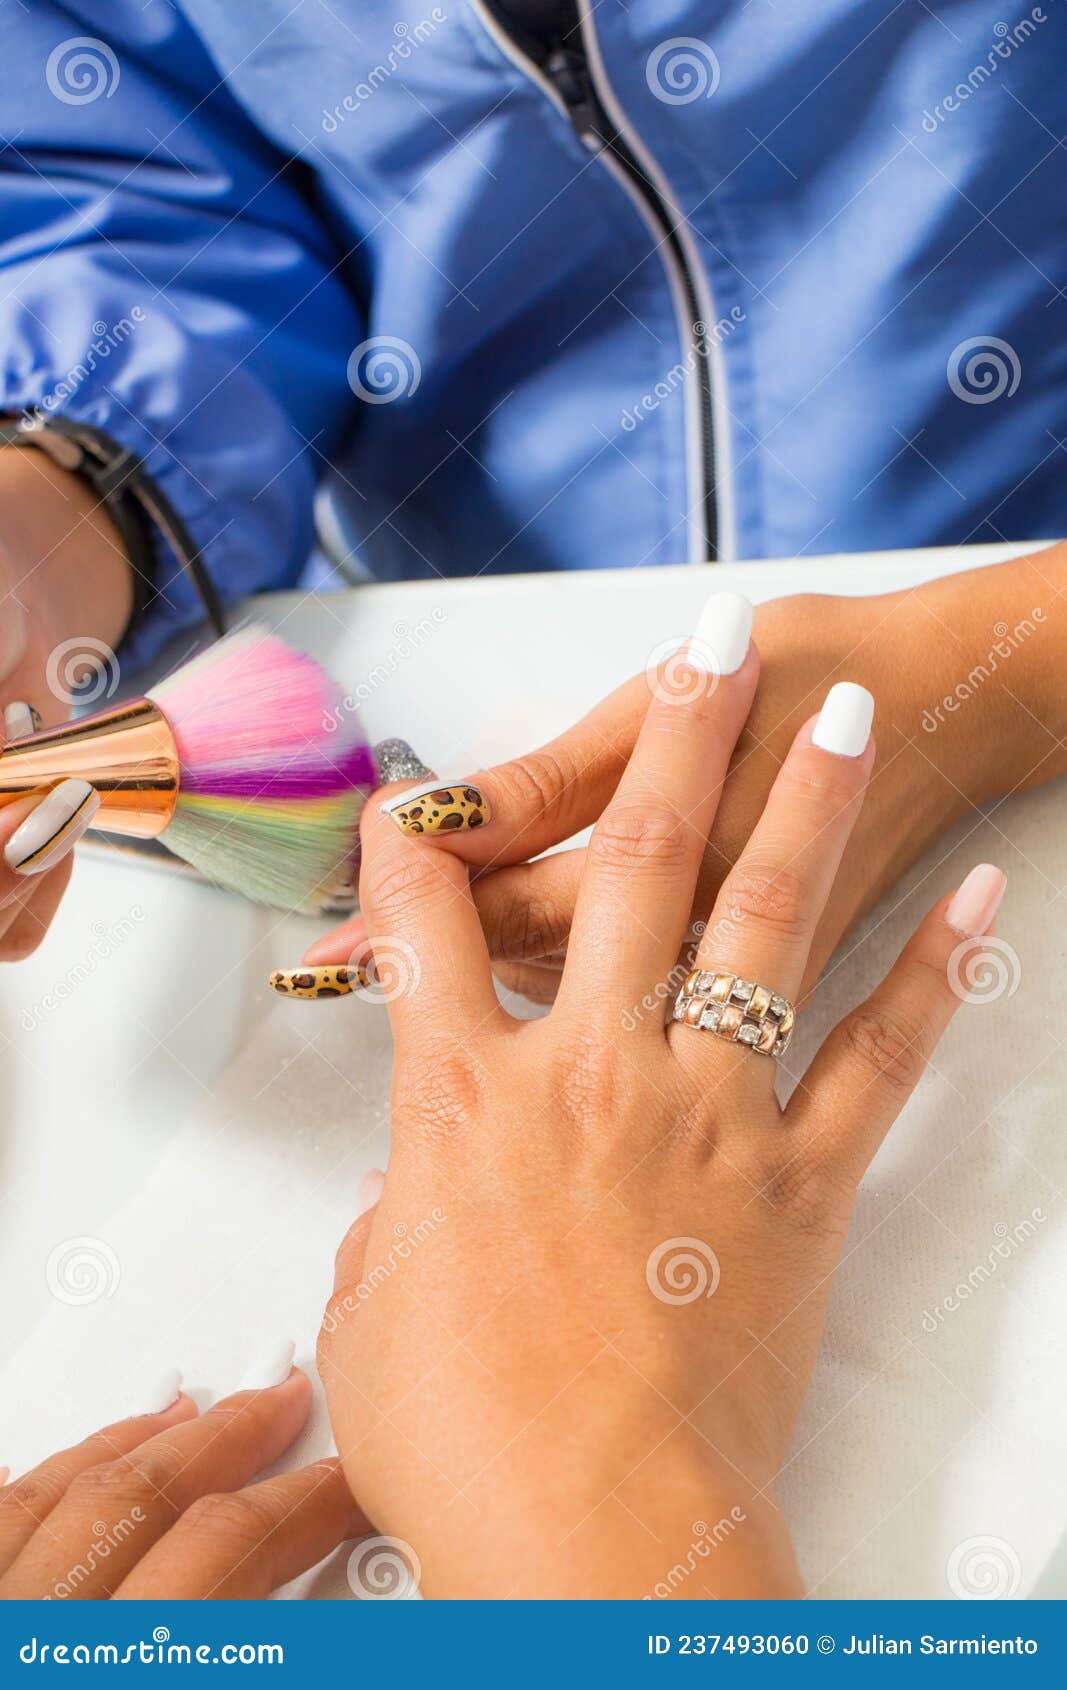 fixing her nail polish